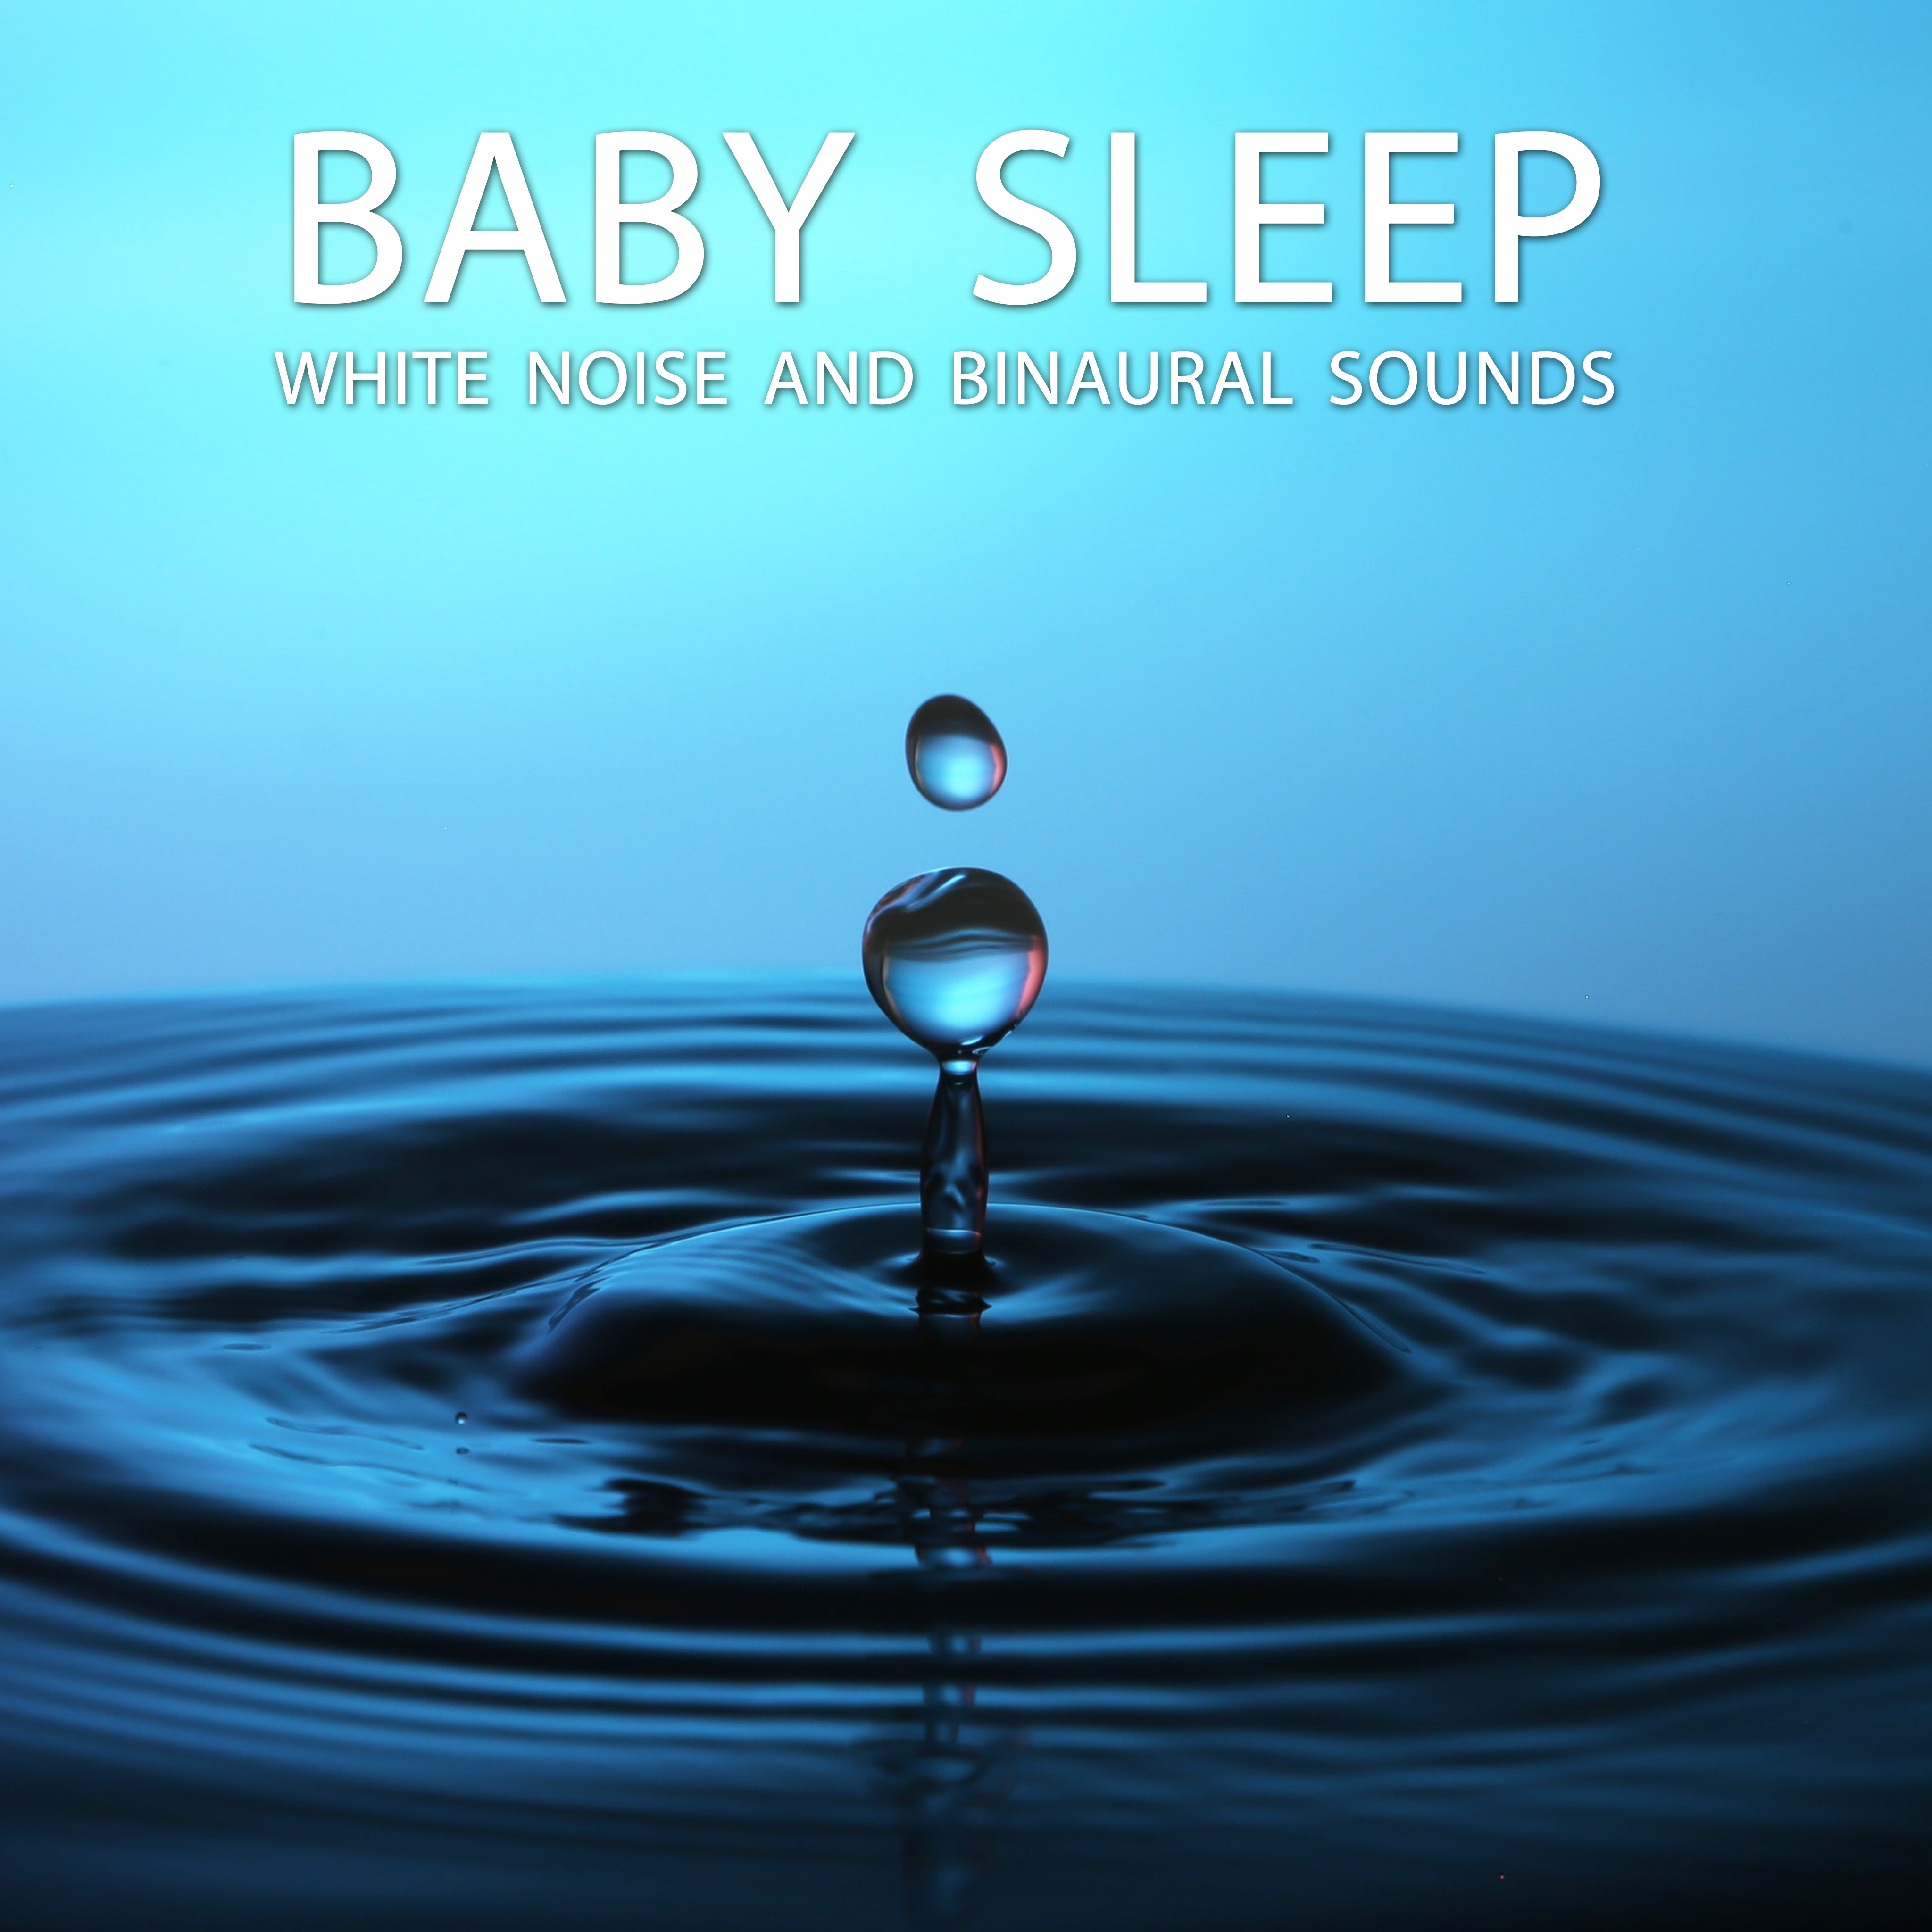 12 Baby Sleep White Noise and Binaural Sounds